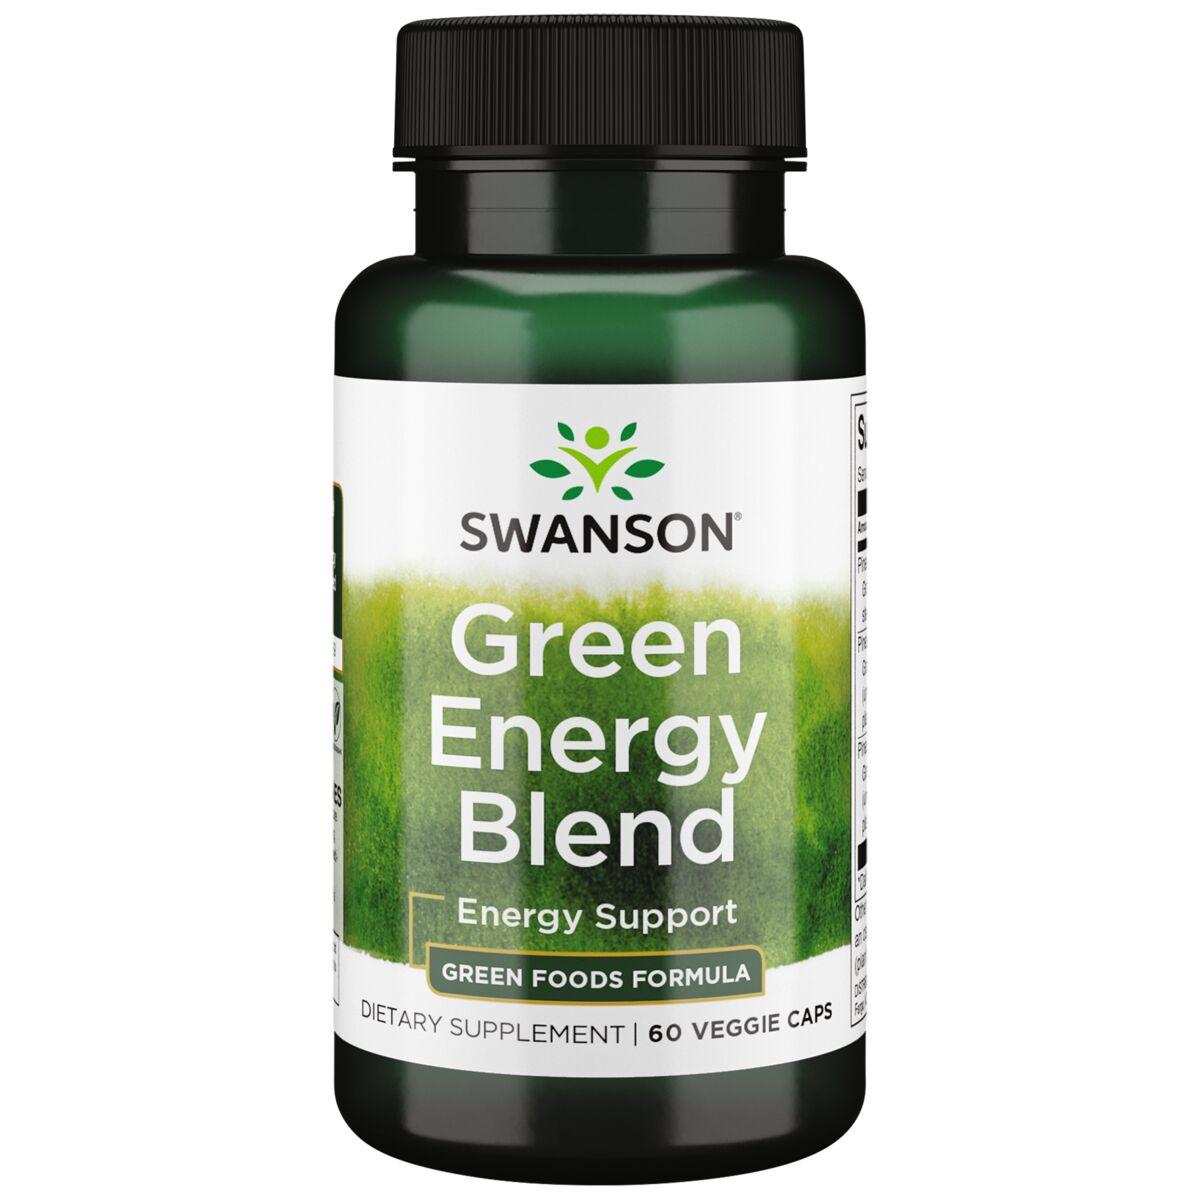 Swanson GreenFoods Formulas Green Energy Blend Supplement Vitamin | 60 Veg Caps